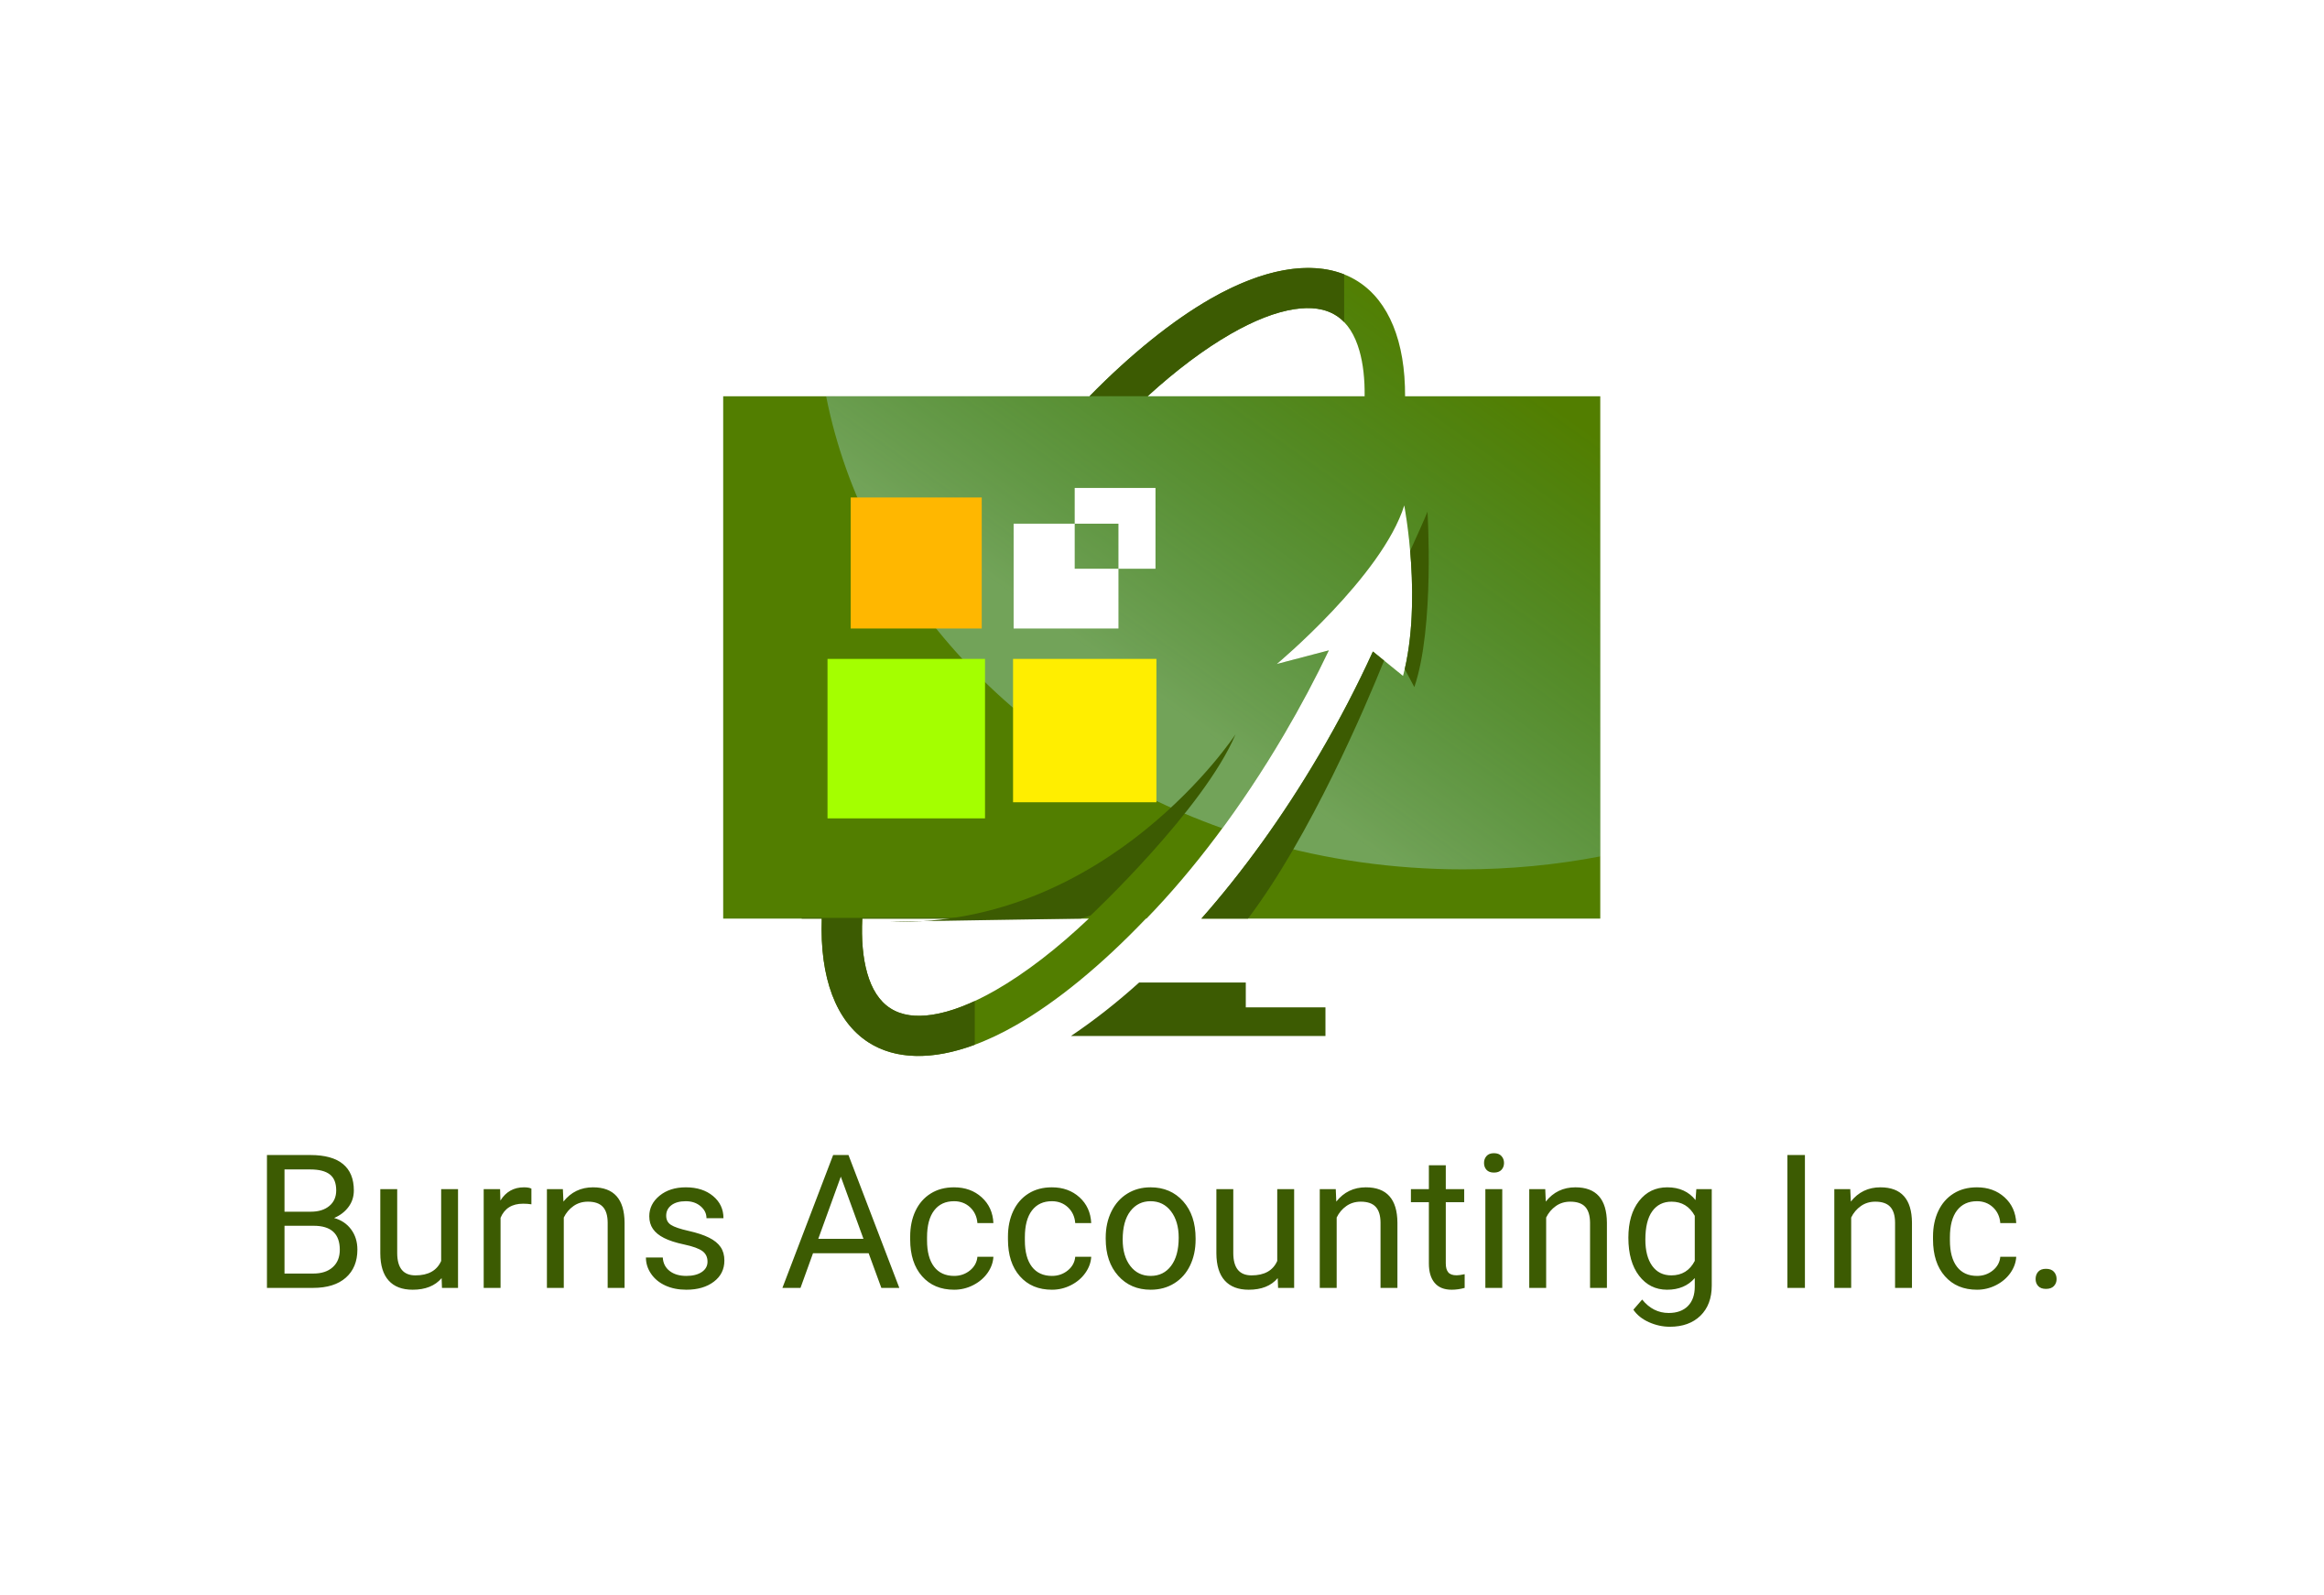 Burns Accounting